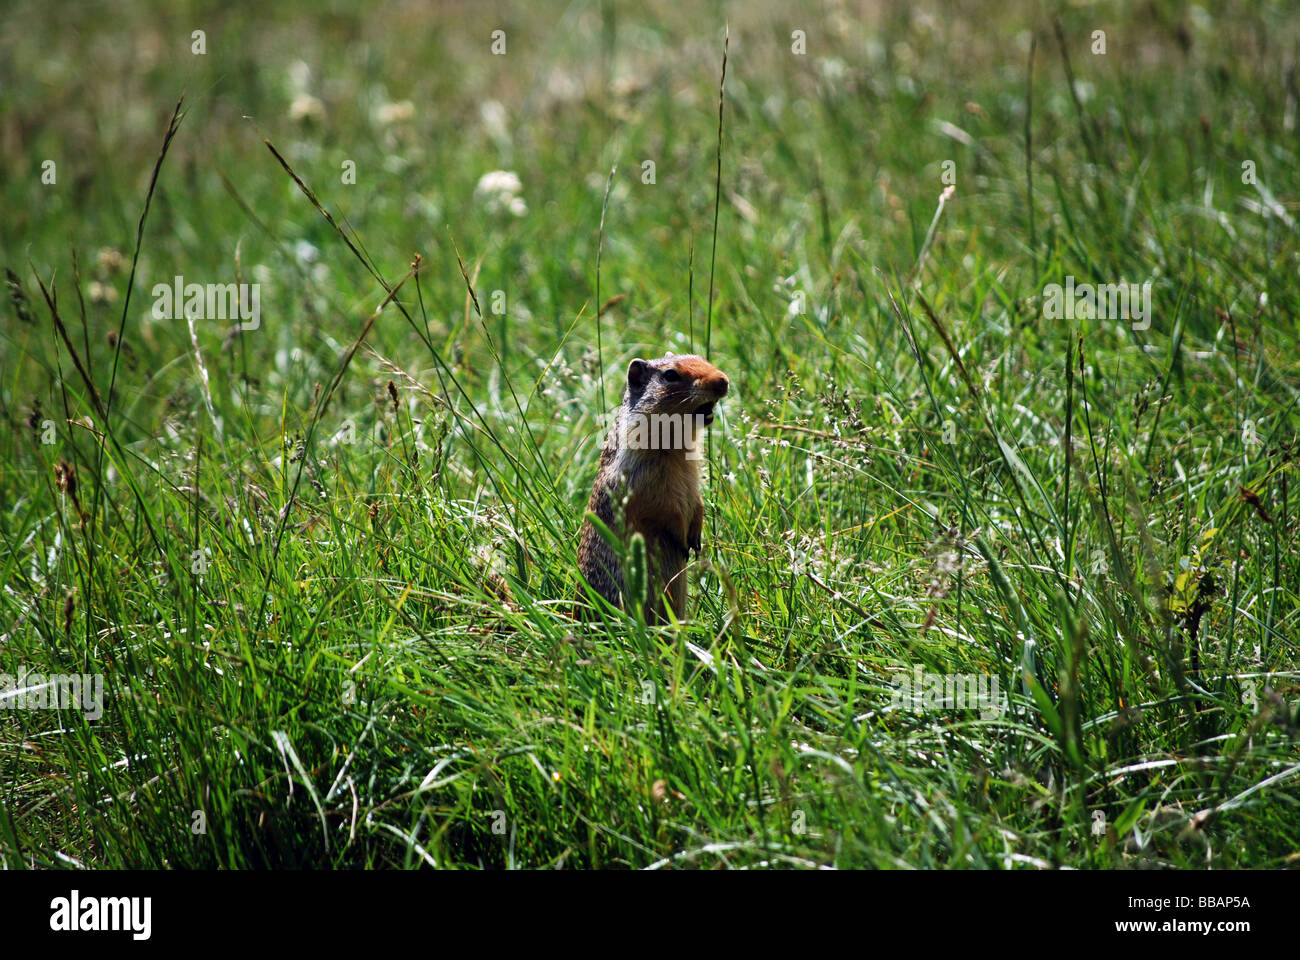 Lone lemming / prairie dog in a grassy field Stock Photo